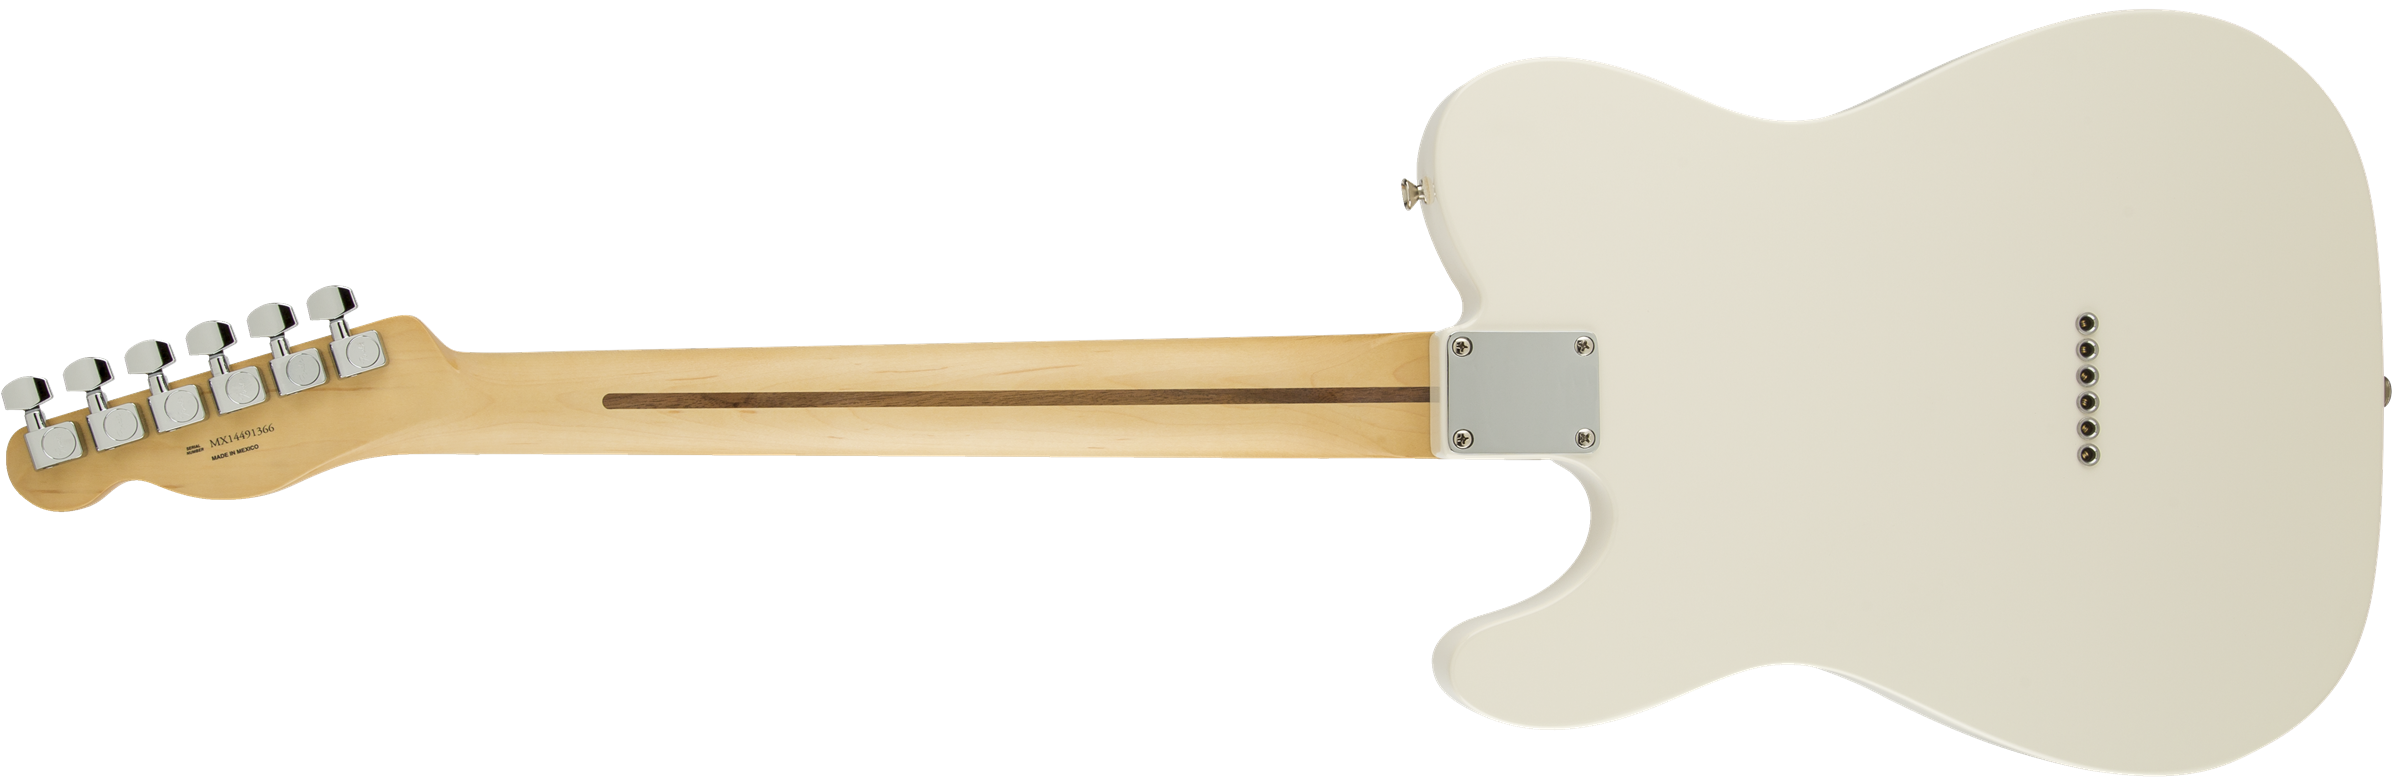 Электрогитара Fender Standard Telecaster Arctic White